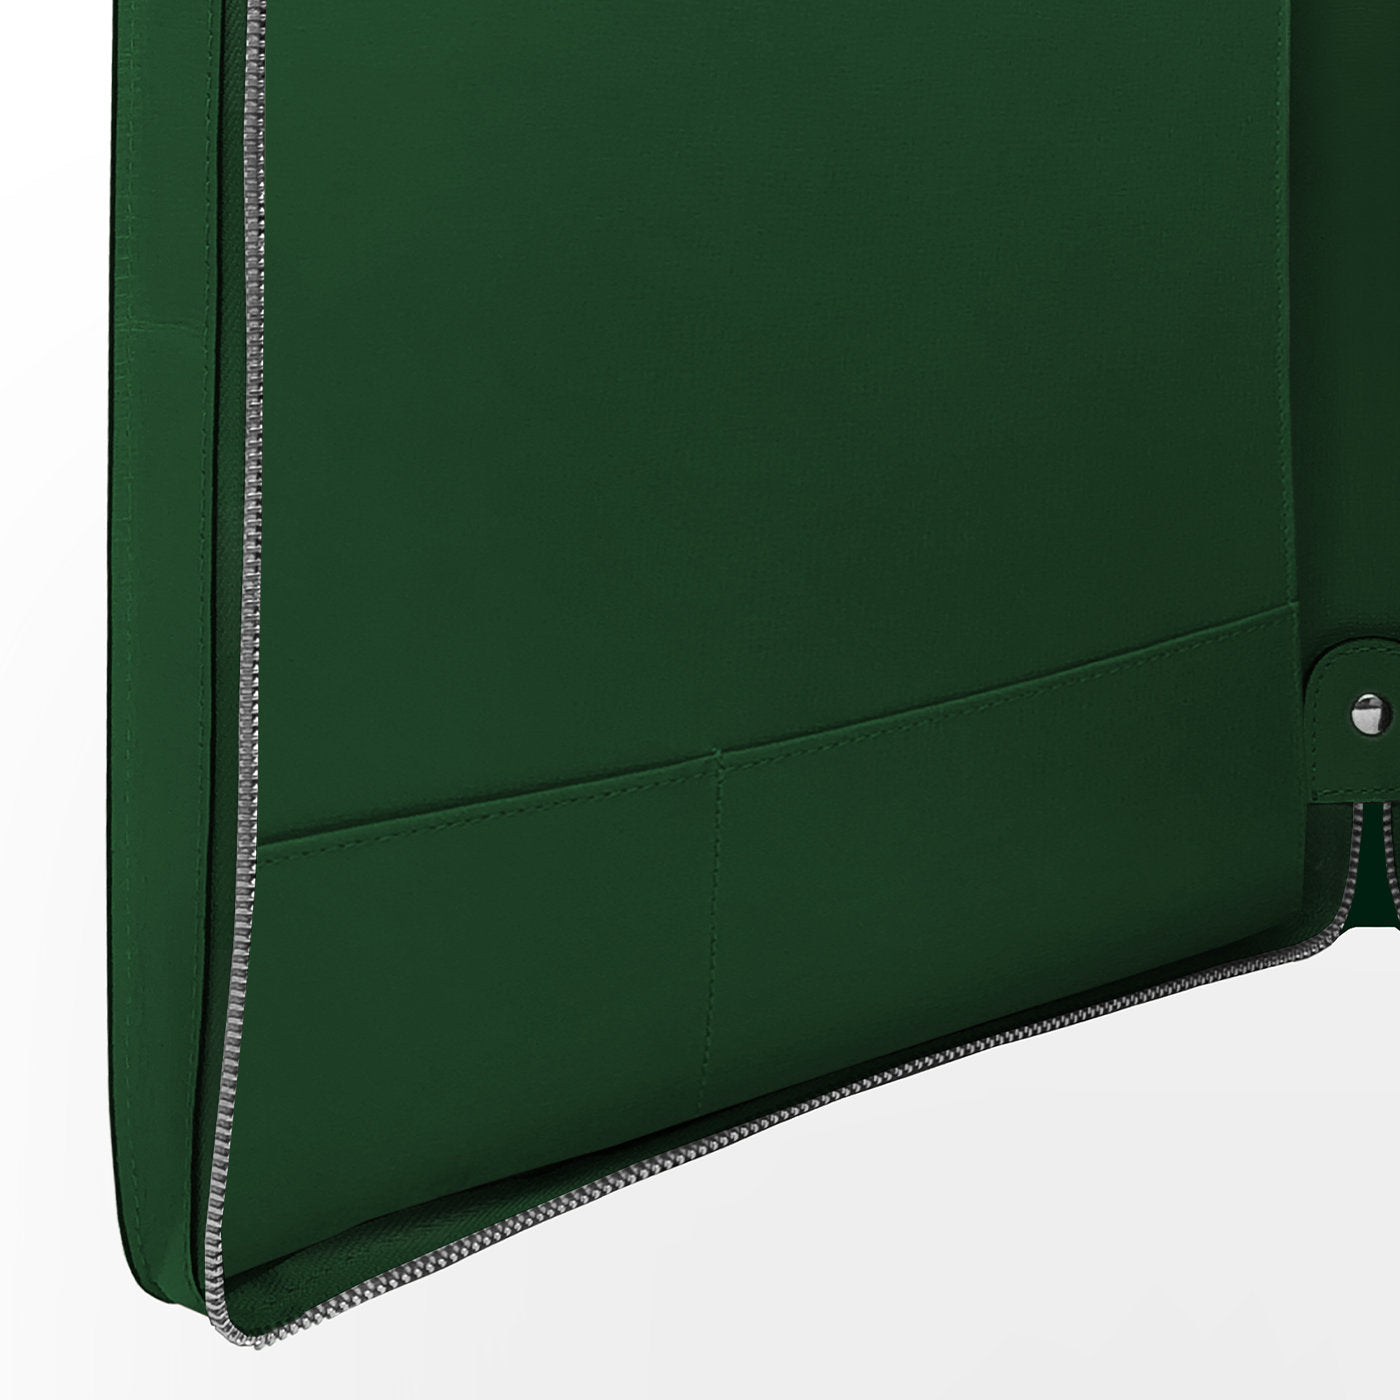 Greenray Leather Laptop Case - Alternative view 2